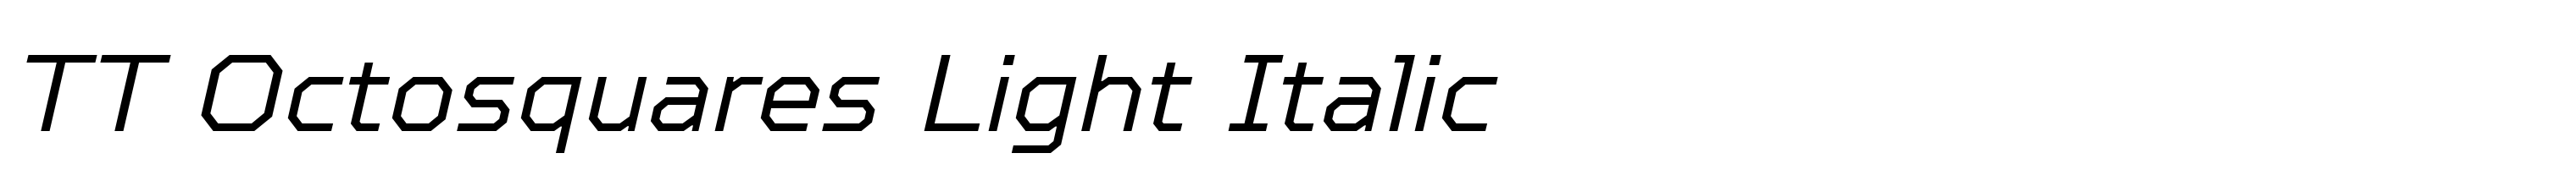 TT Octosquares Light Italic